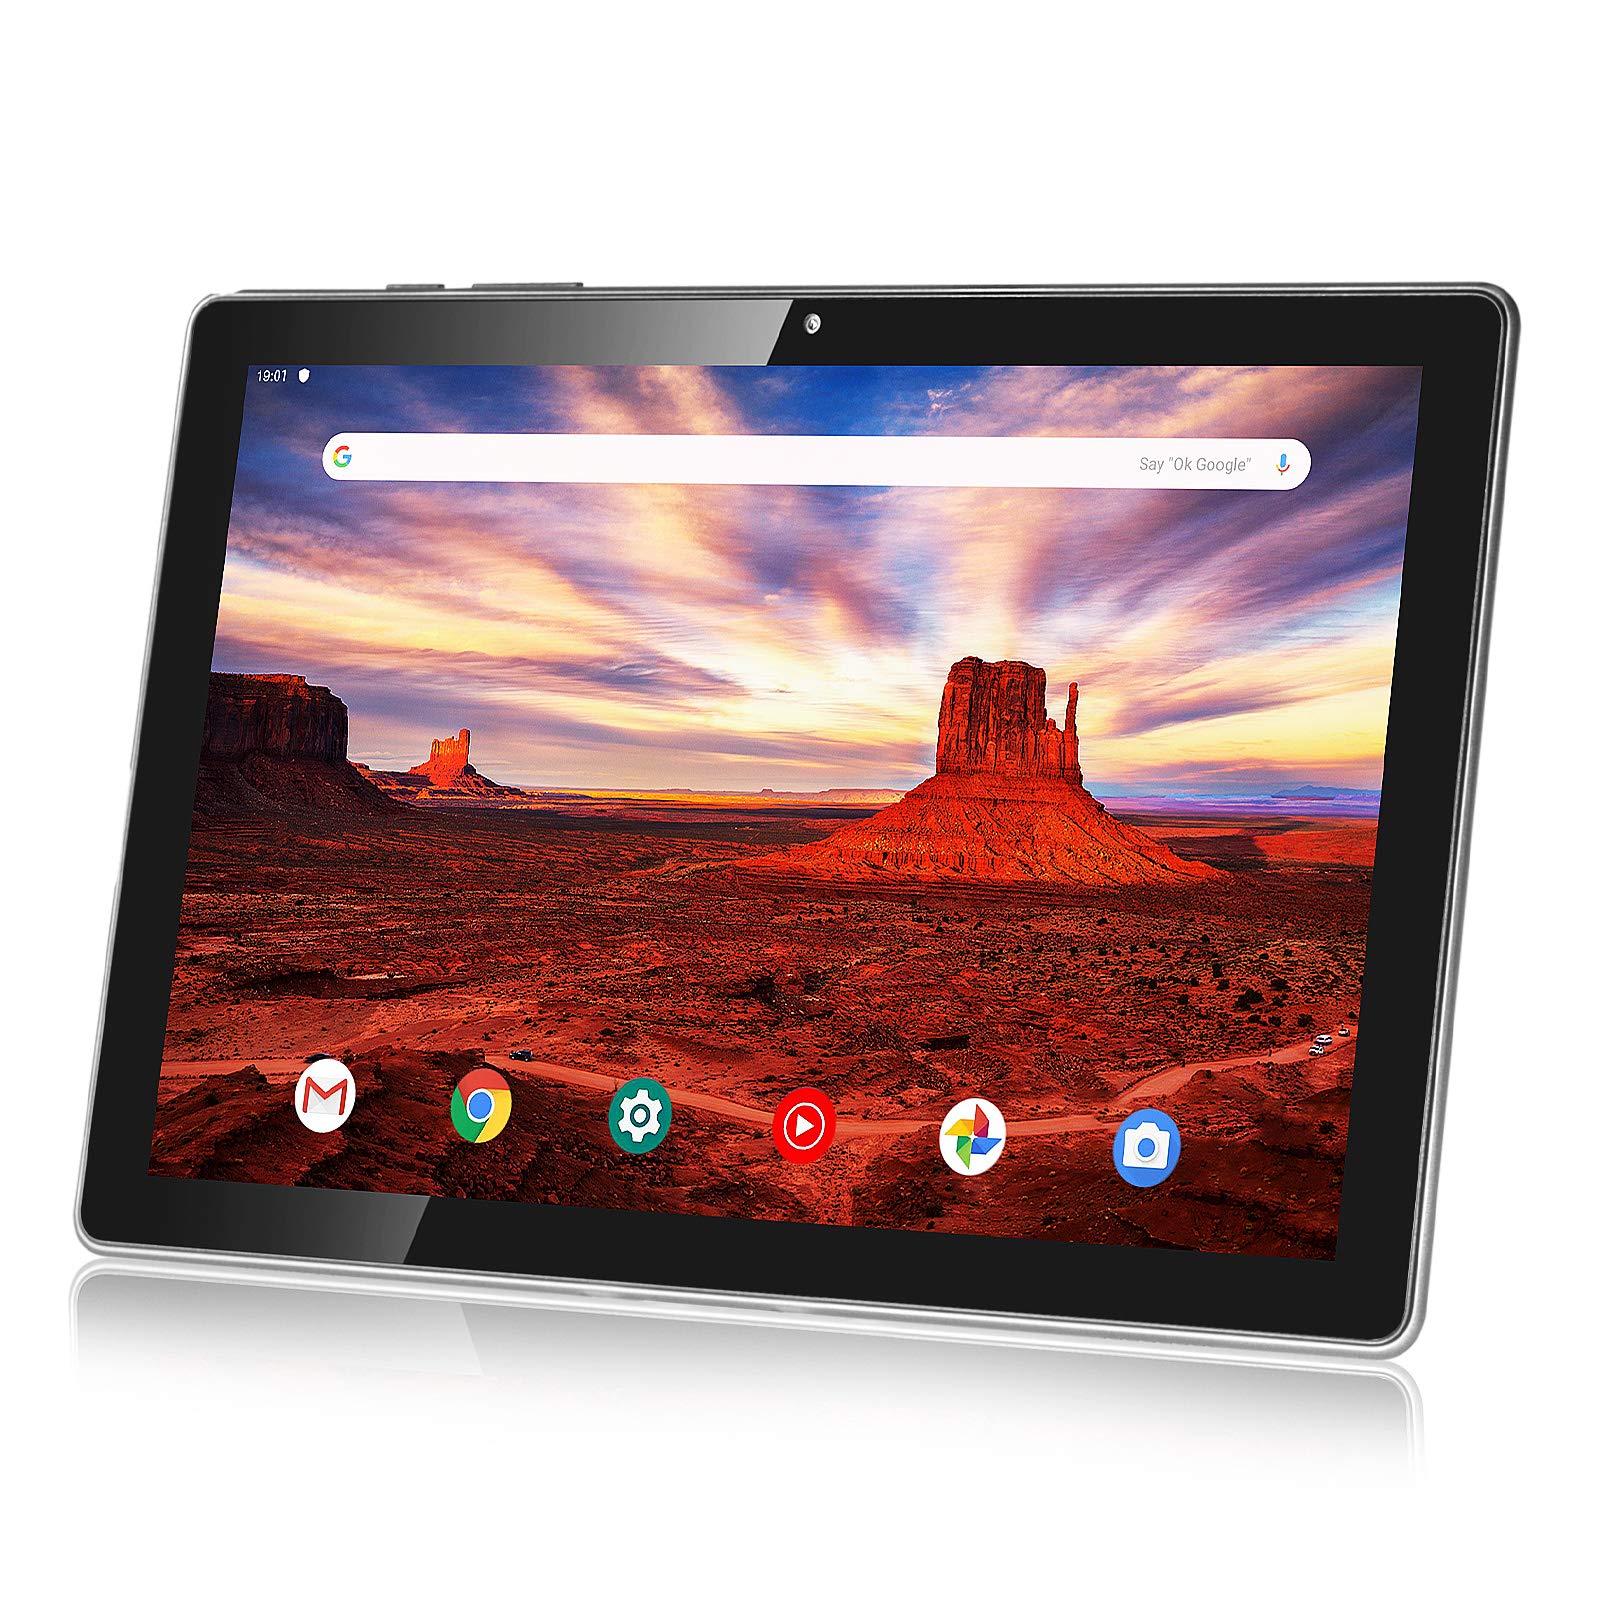 HAOVM Android 11.0 Tablet 10 Inch, MediaPad P10 Octa-Core 1.6GHz Processor,3GB RAM,64GB Storage,10.1